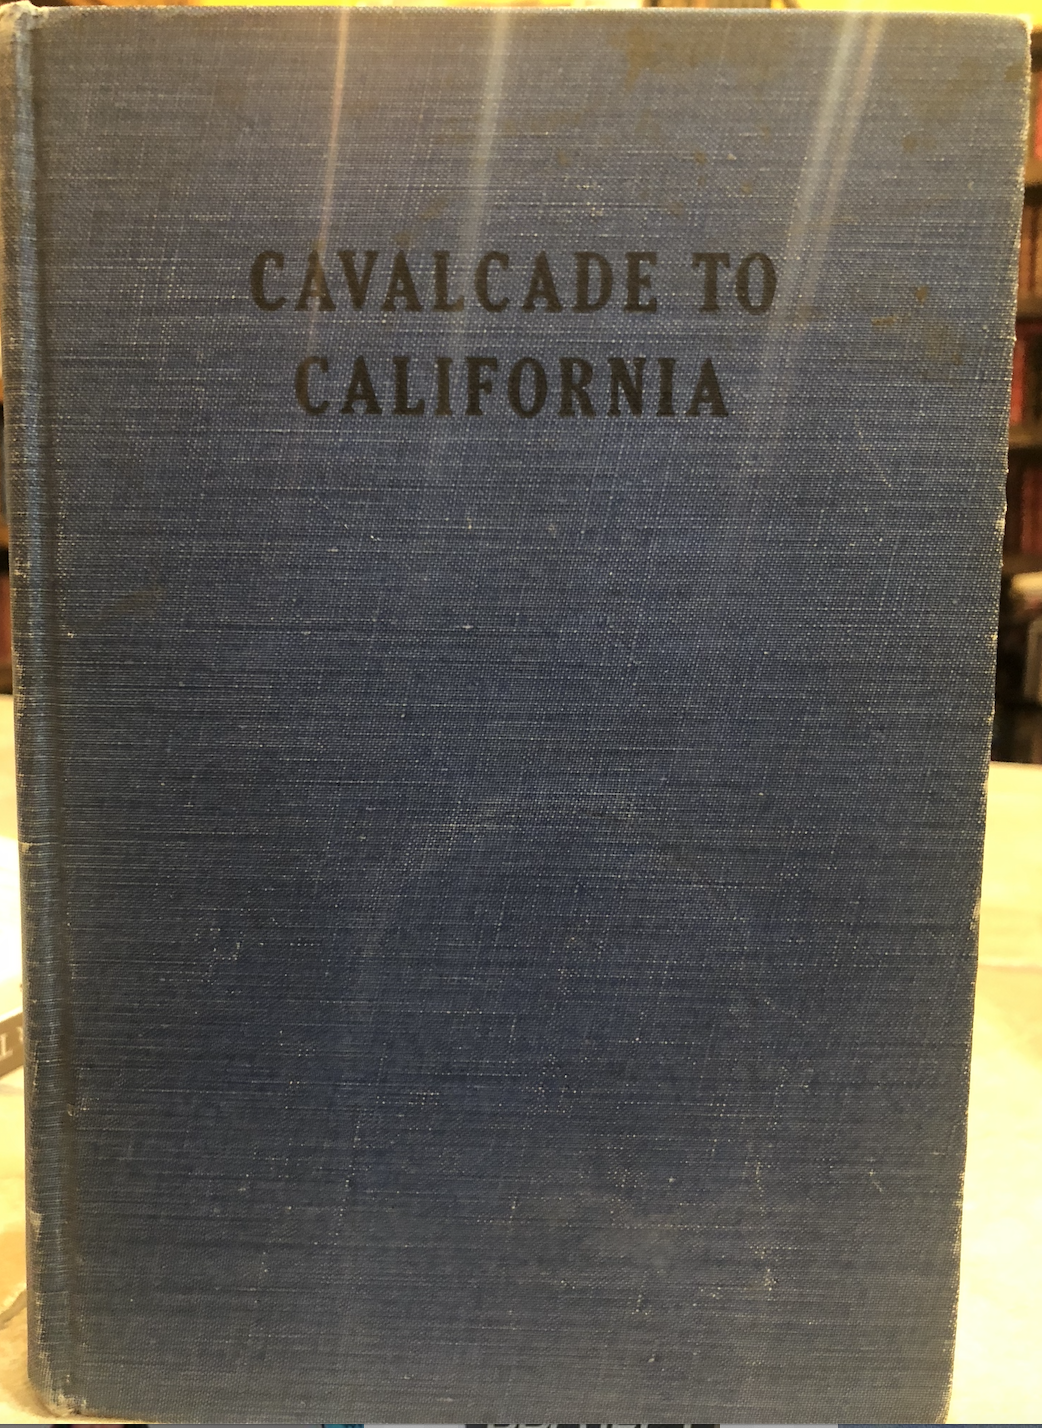 Cavalcade to California